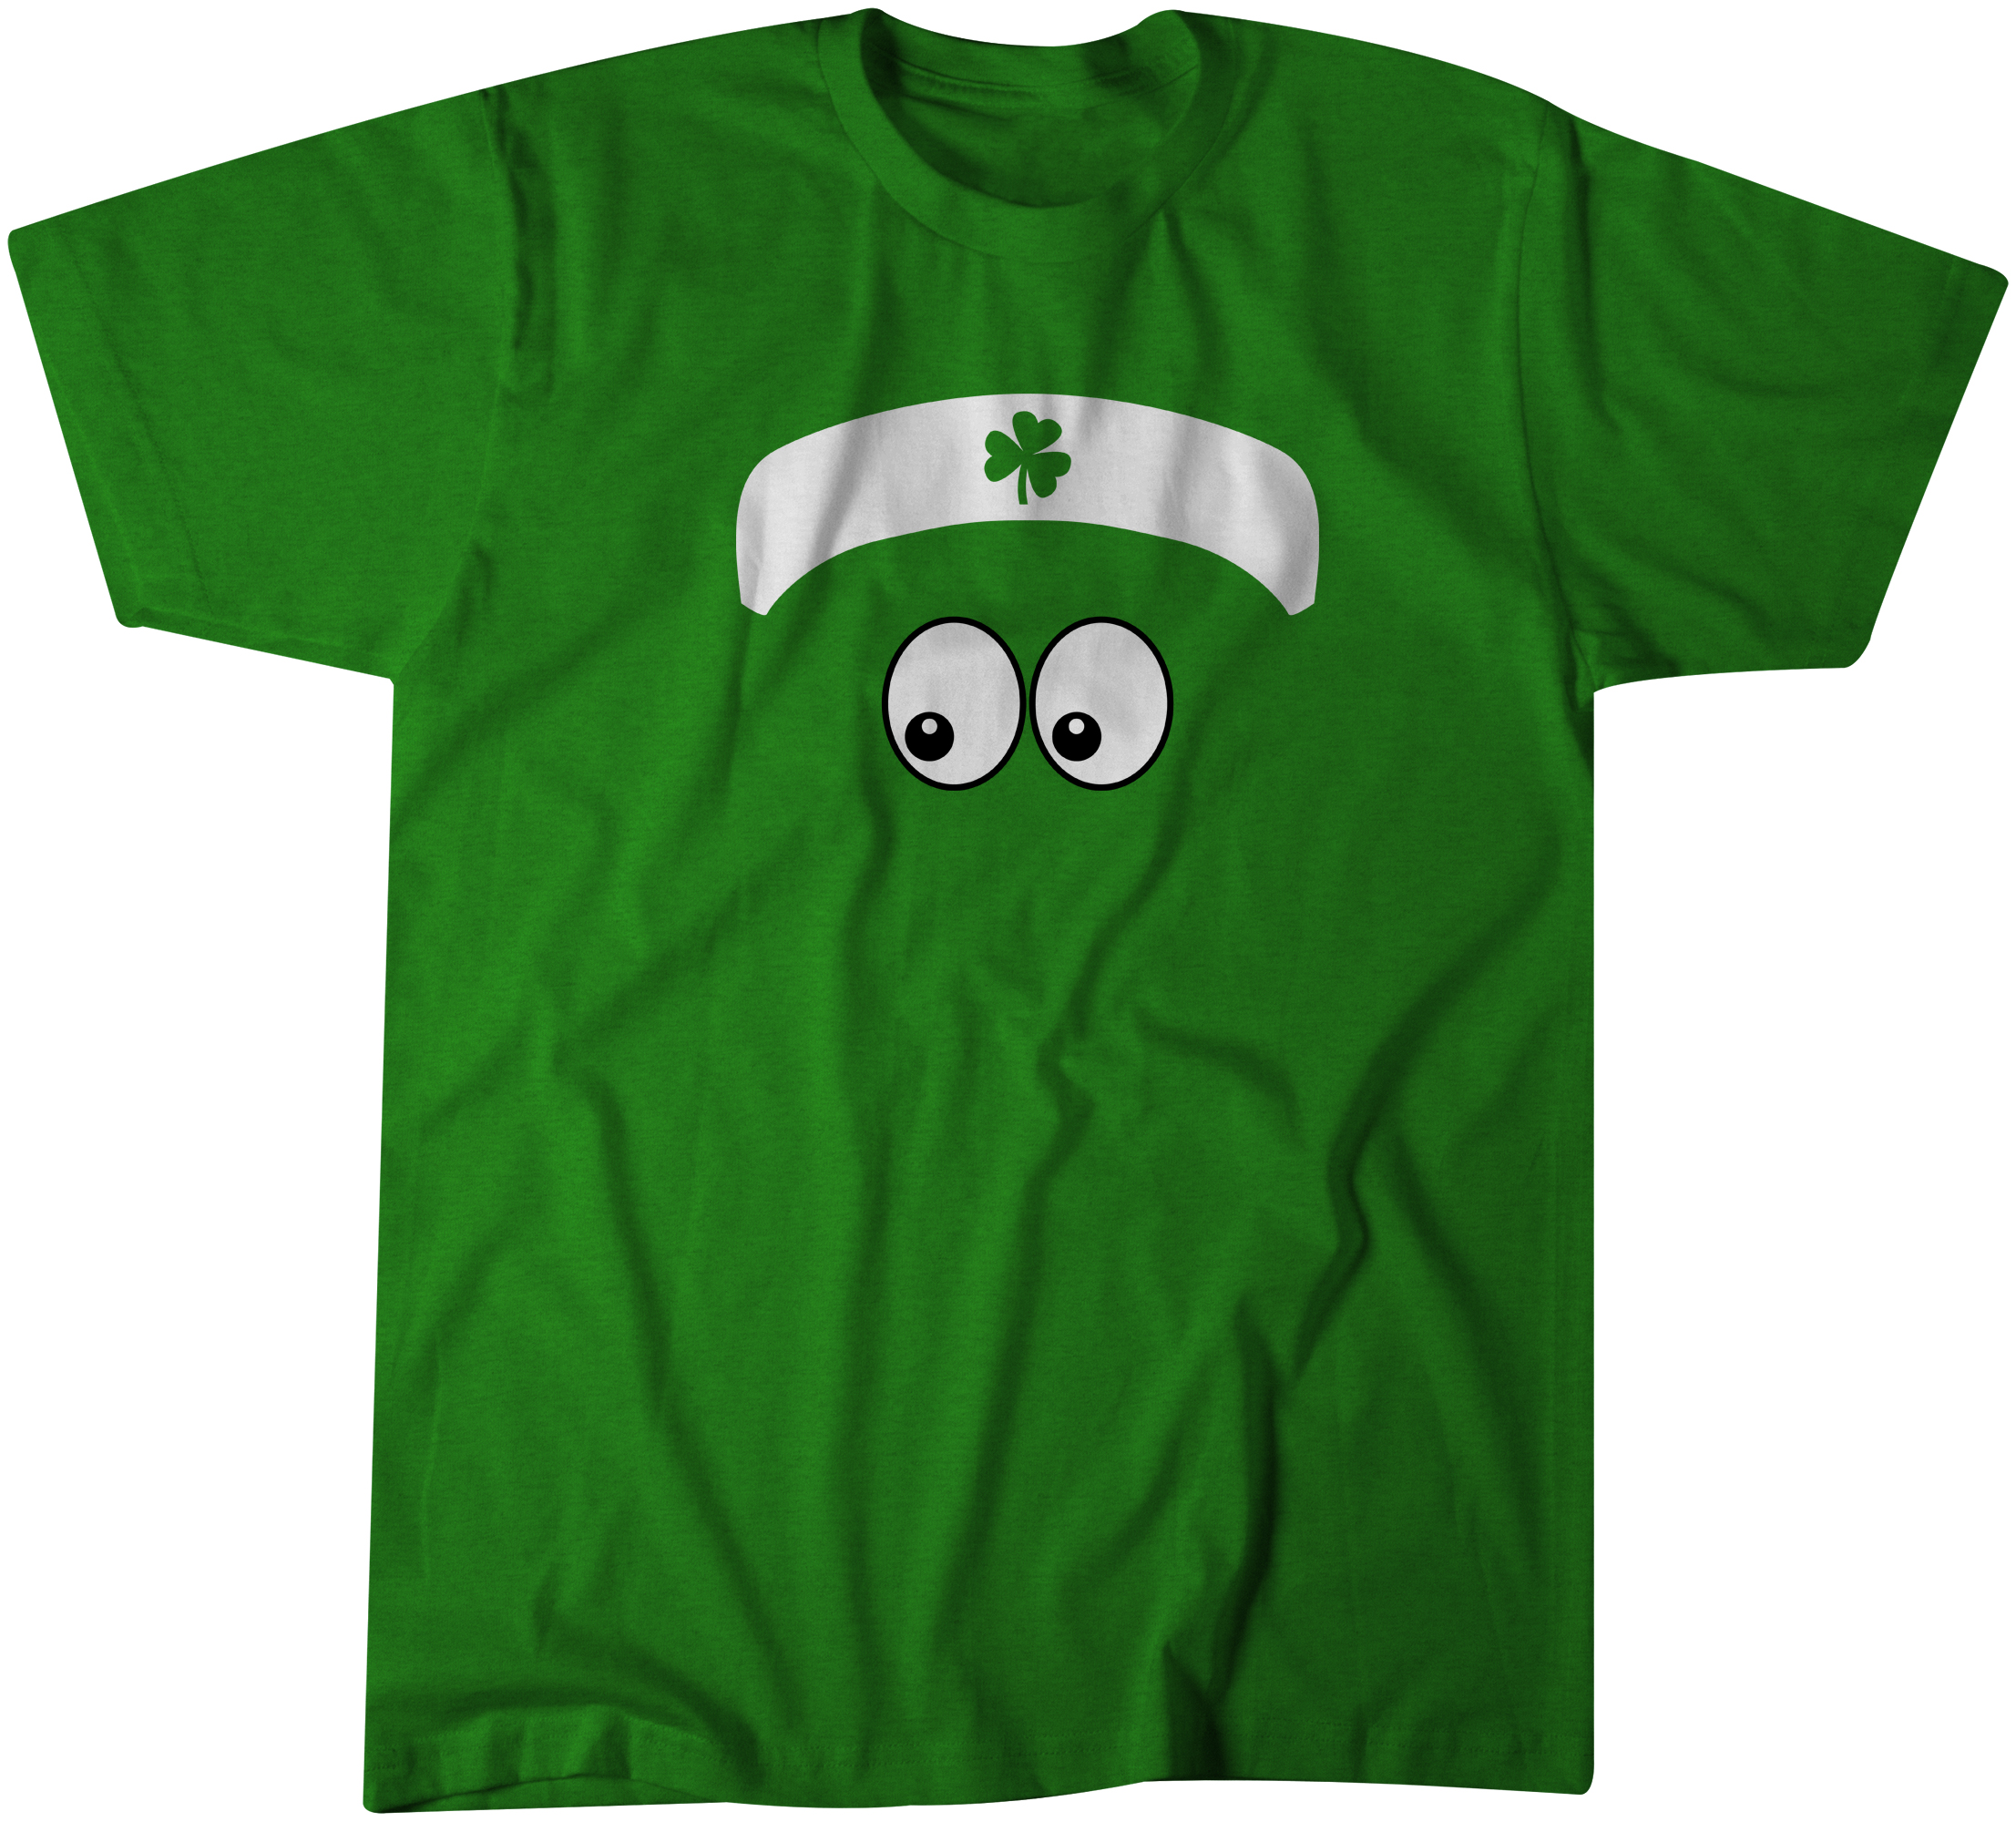 Get the Isaiah Thomas Emoji T-Shirt2213 x 2000